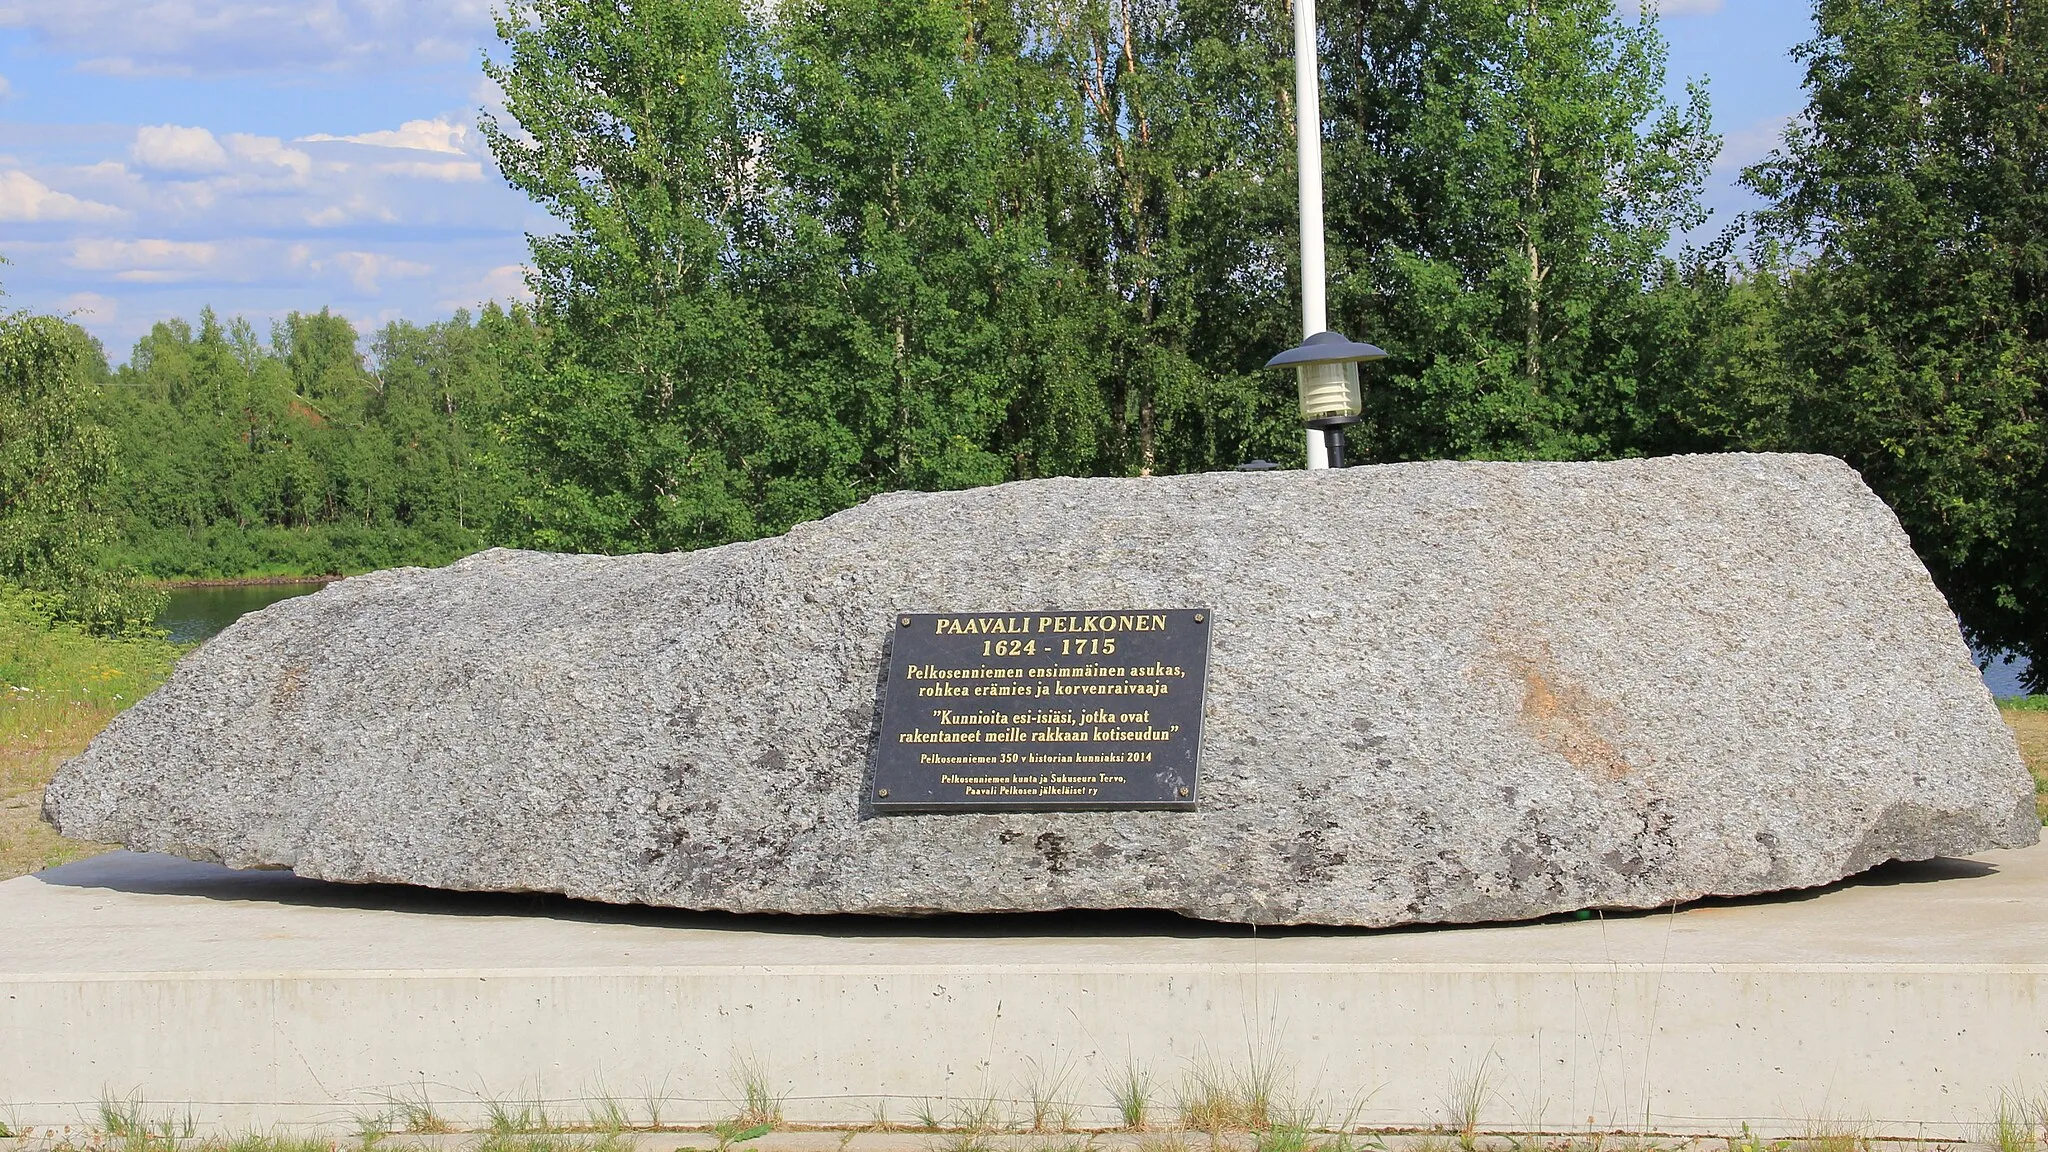 Photo showing: Paavali Pelkonen memorial plaque, Pelkosenniemi, Finland. - Unveiled in 2014.